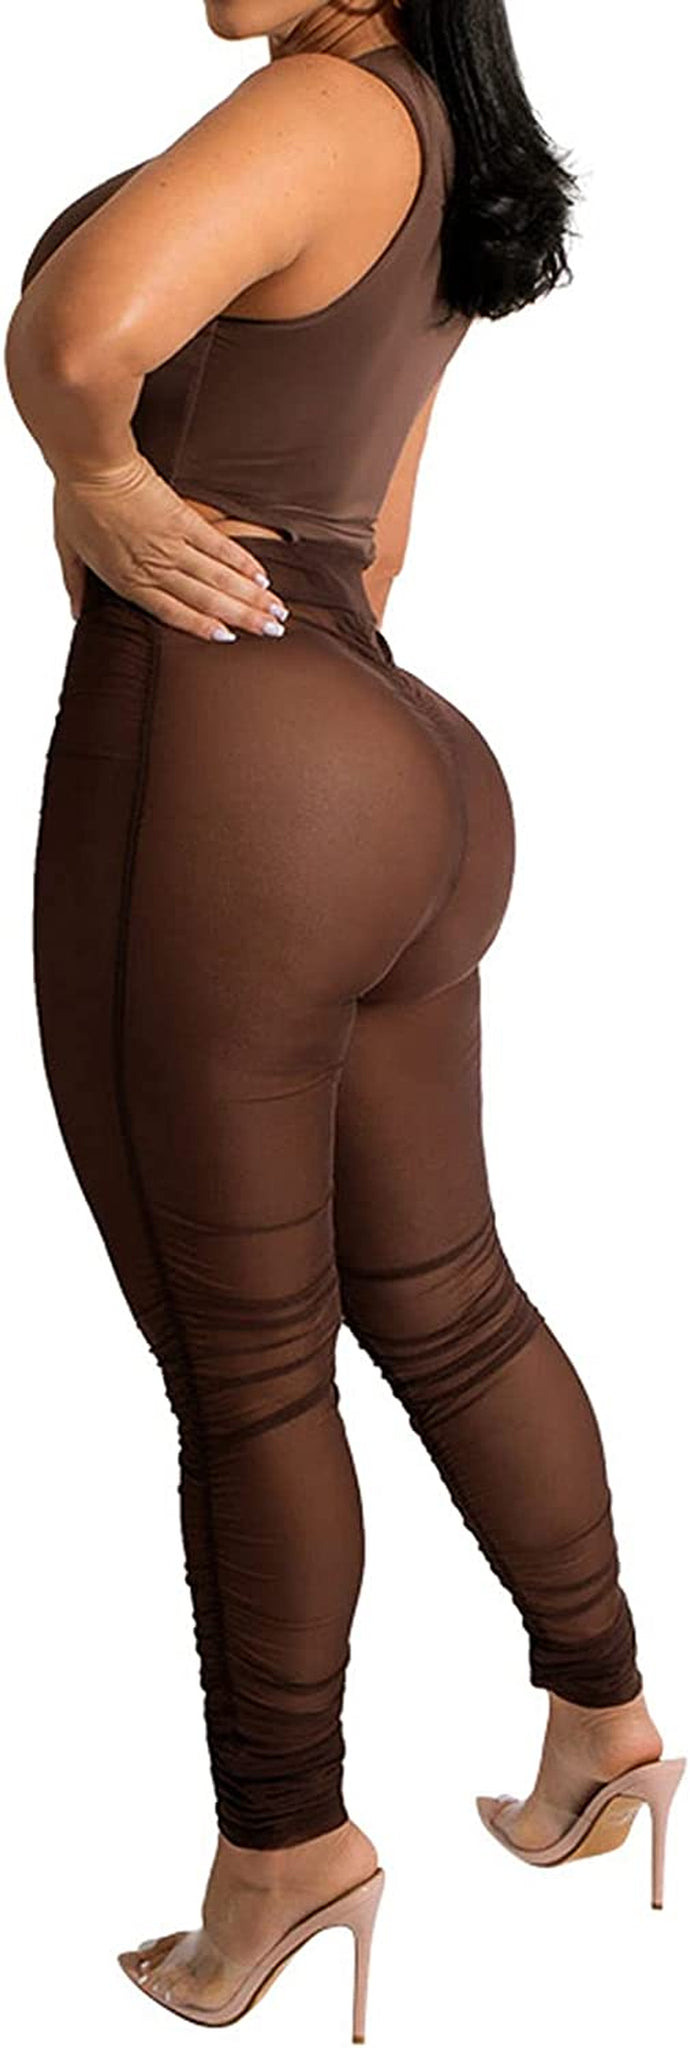 New Women Casual Sleeveless Bodycon Romper Jumpsuit Club Bodysuit Long Pants